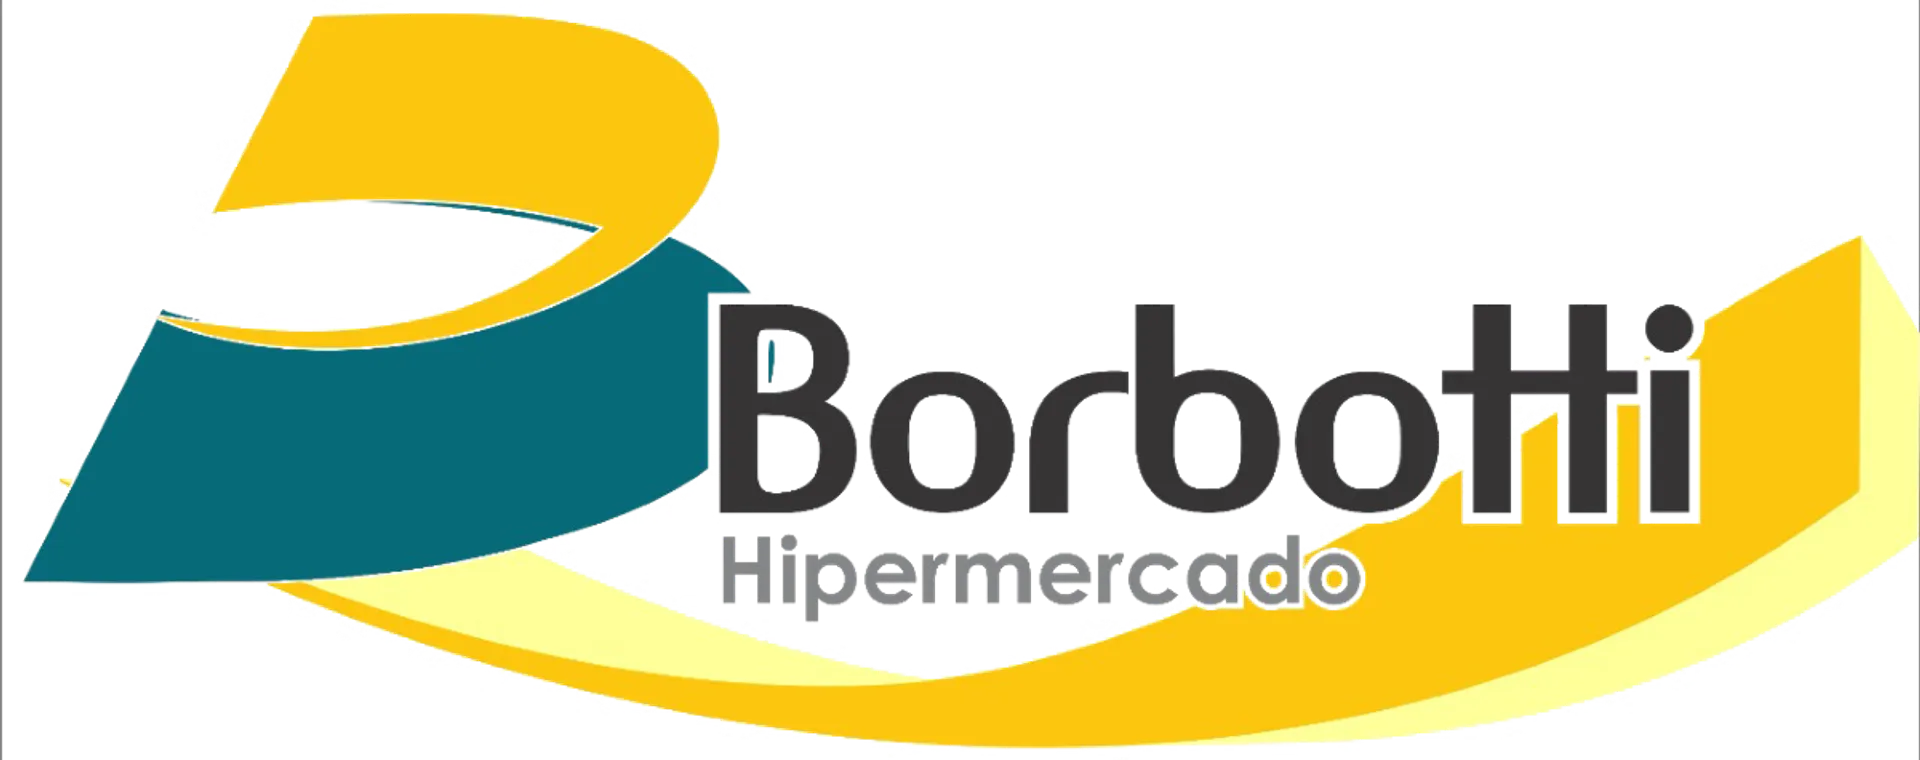 BORBOTTI HIPERMERCADO logo